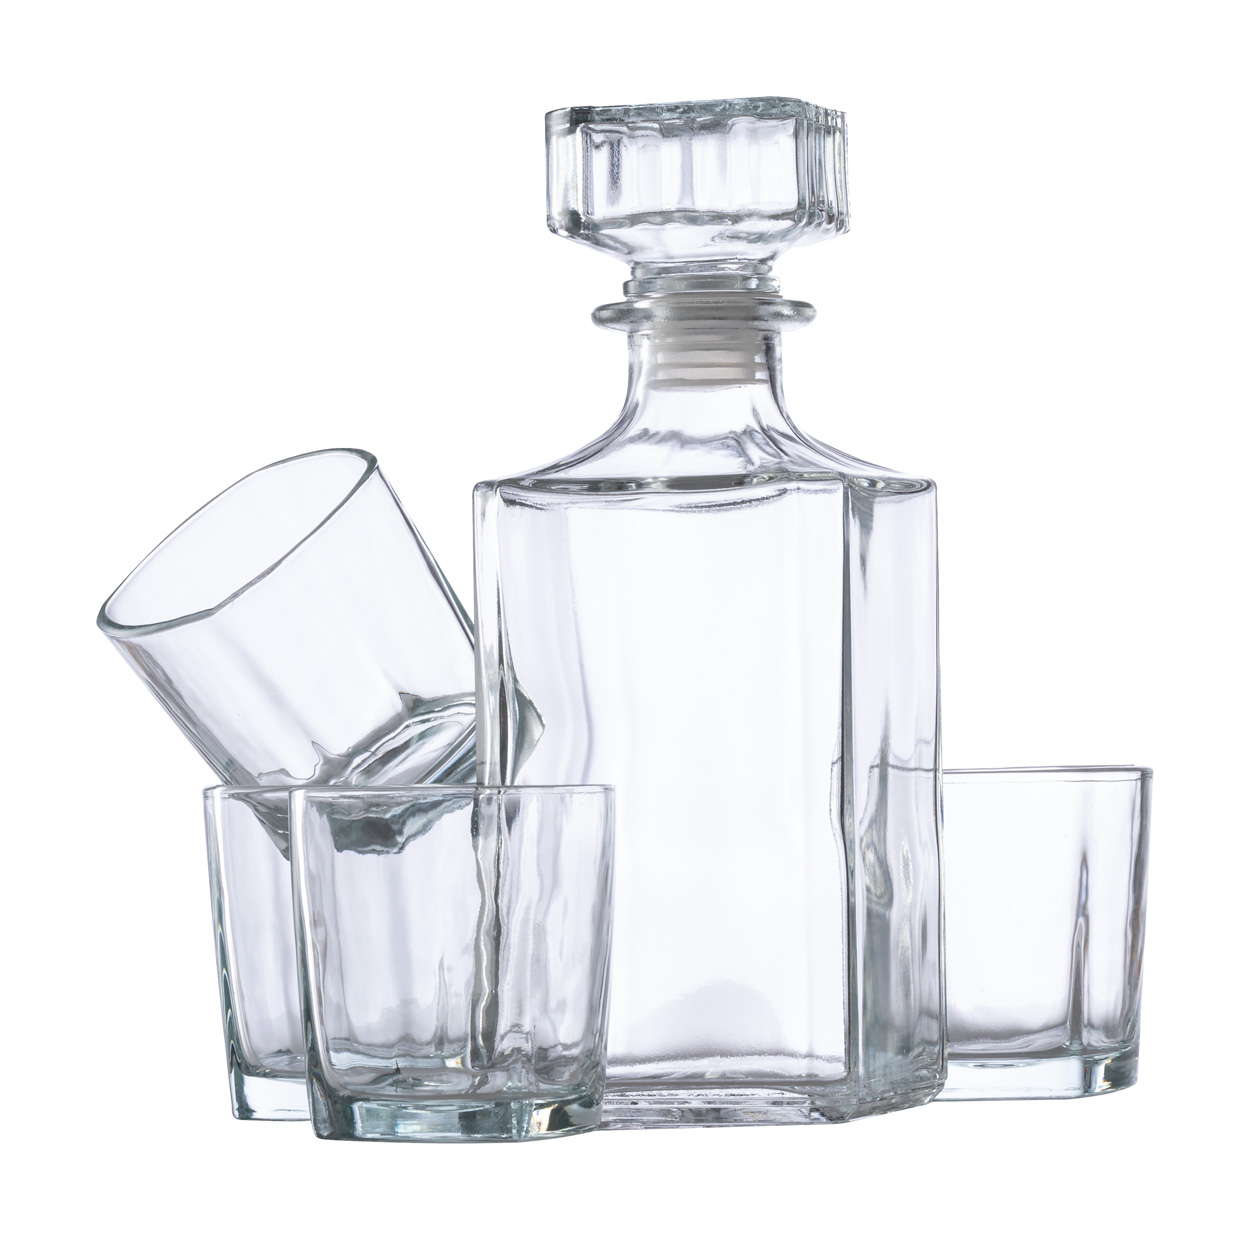 Rockwel whiskey set - transparent